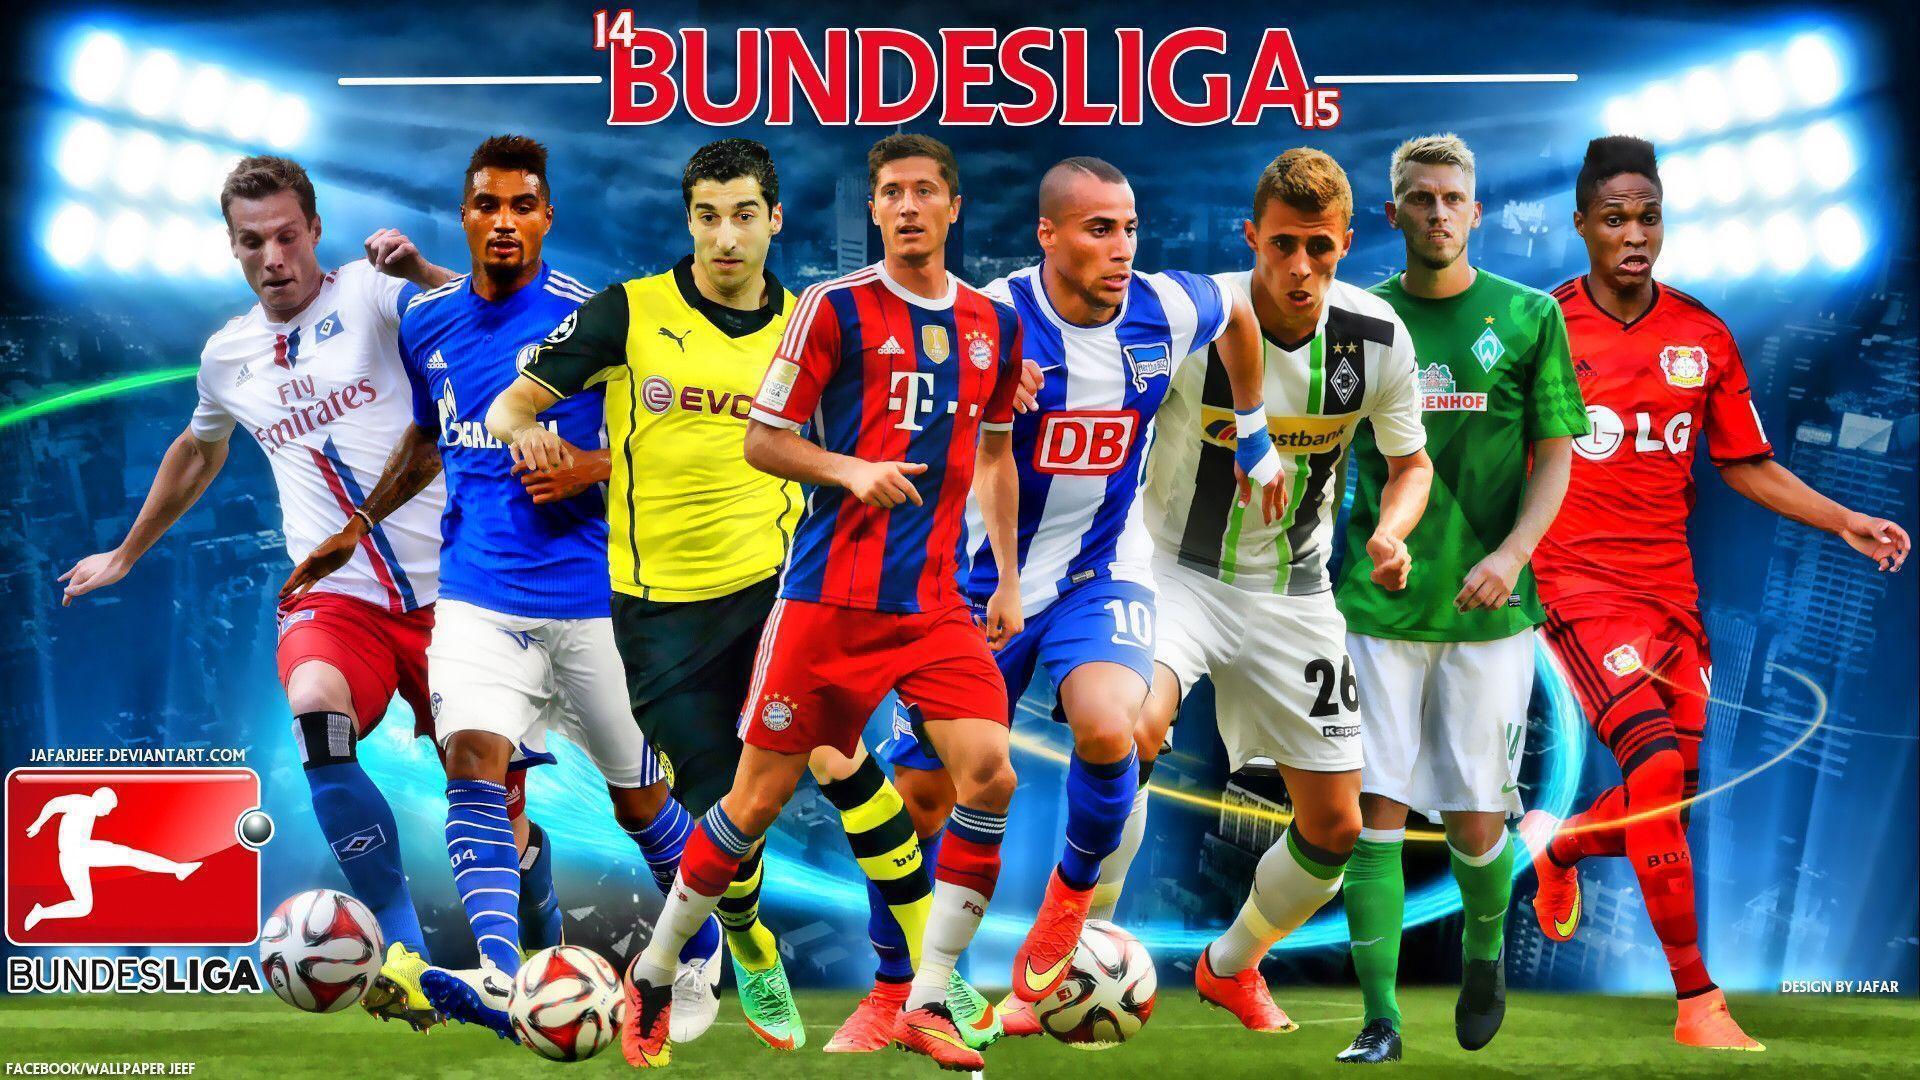 Bundesliga 2014 2015 Football Stars Wallpaper Wide Or HD. Sports